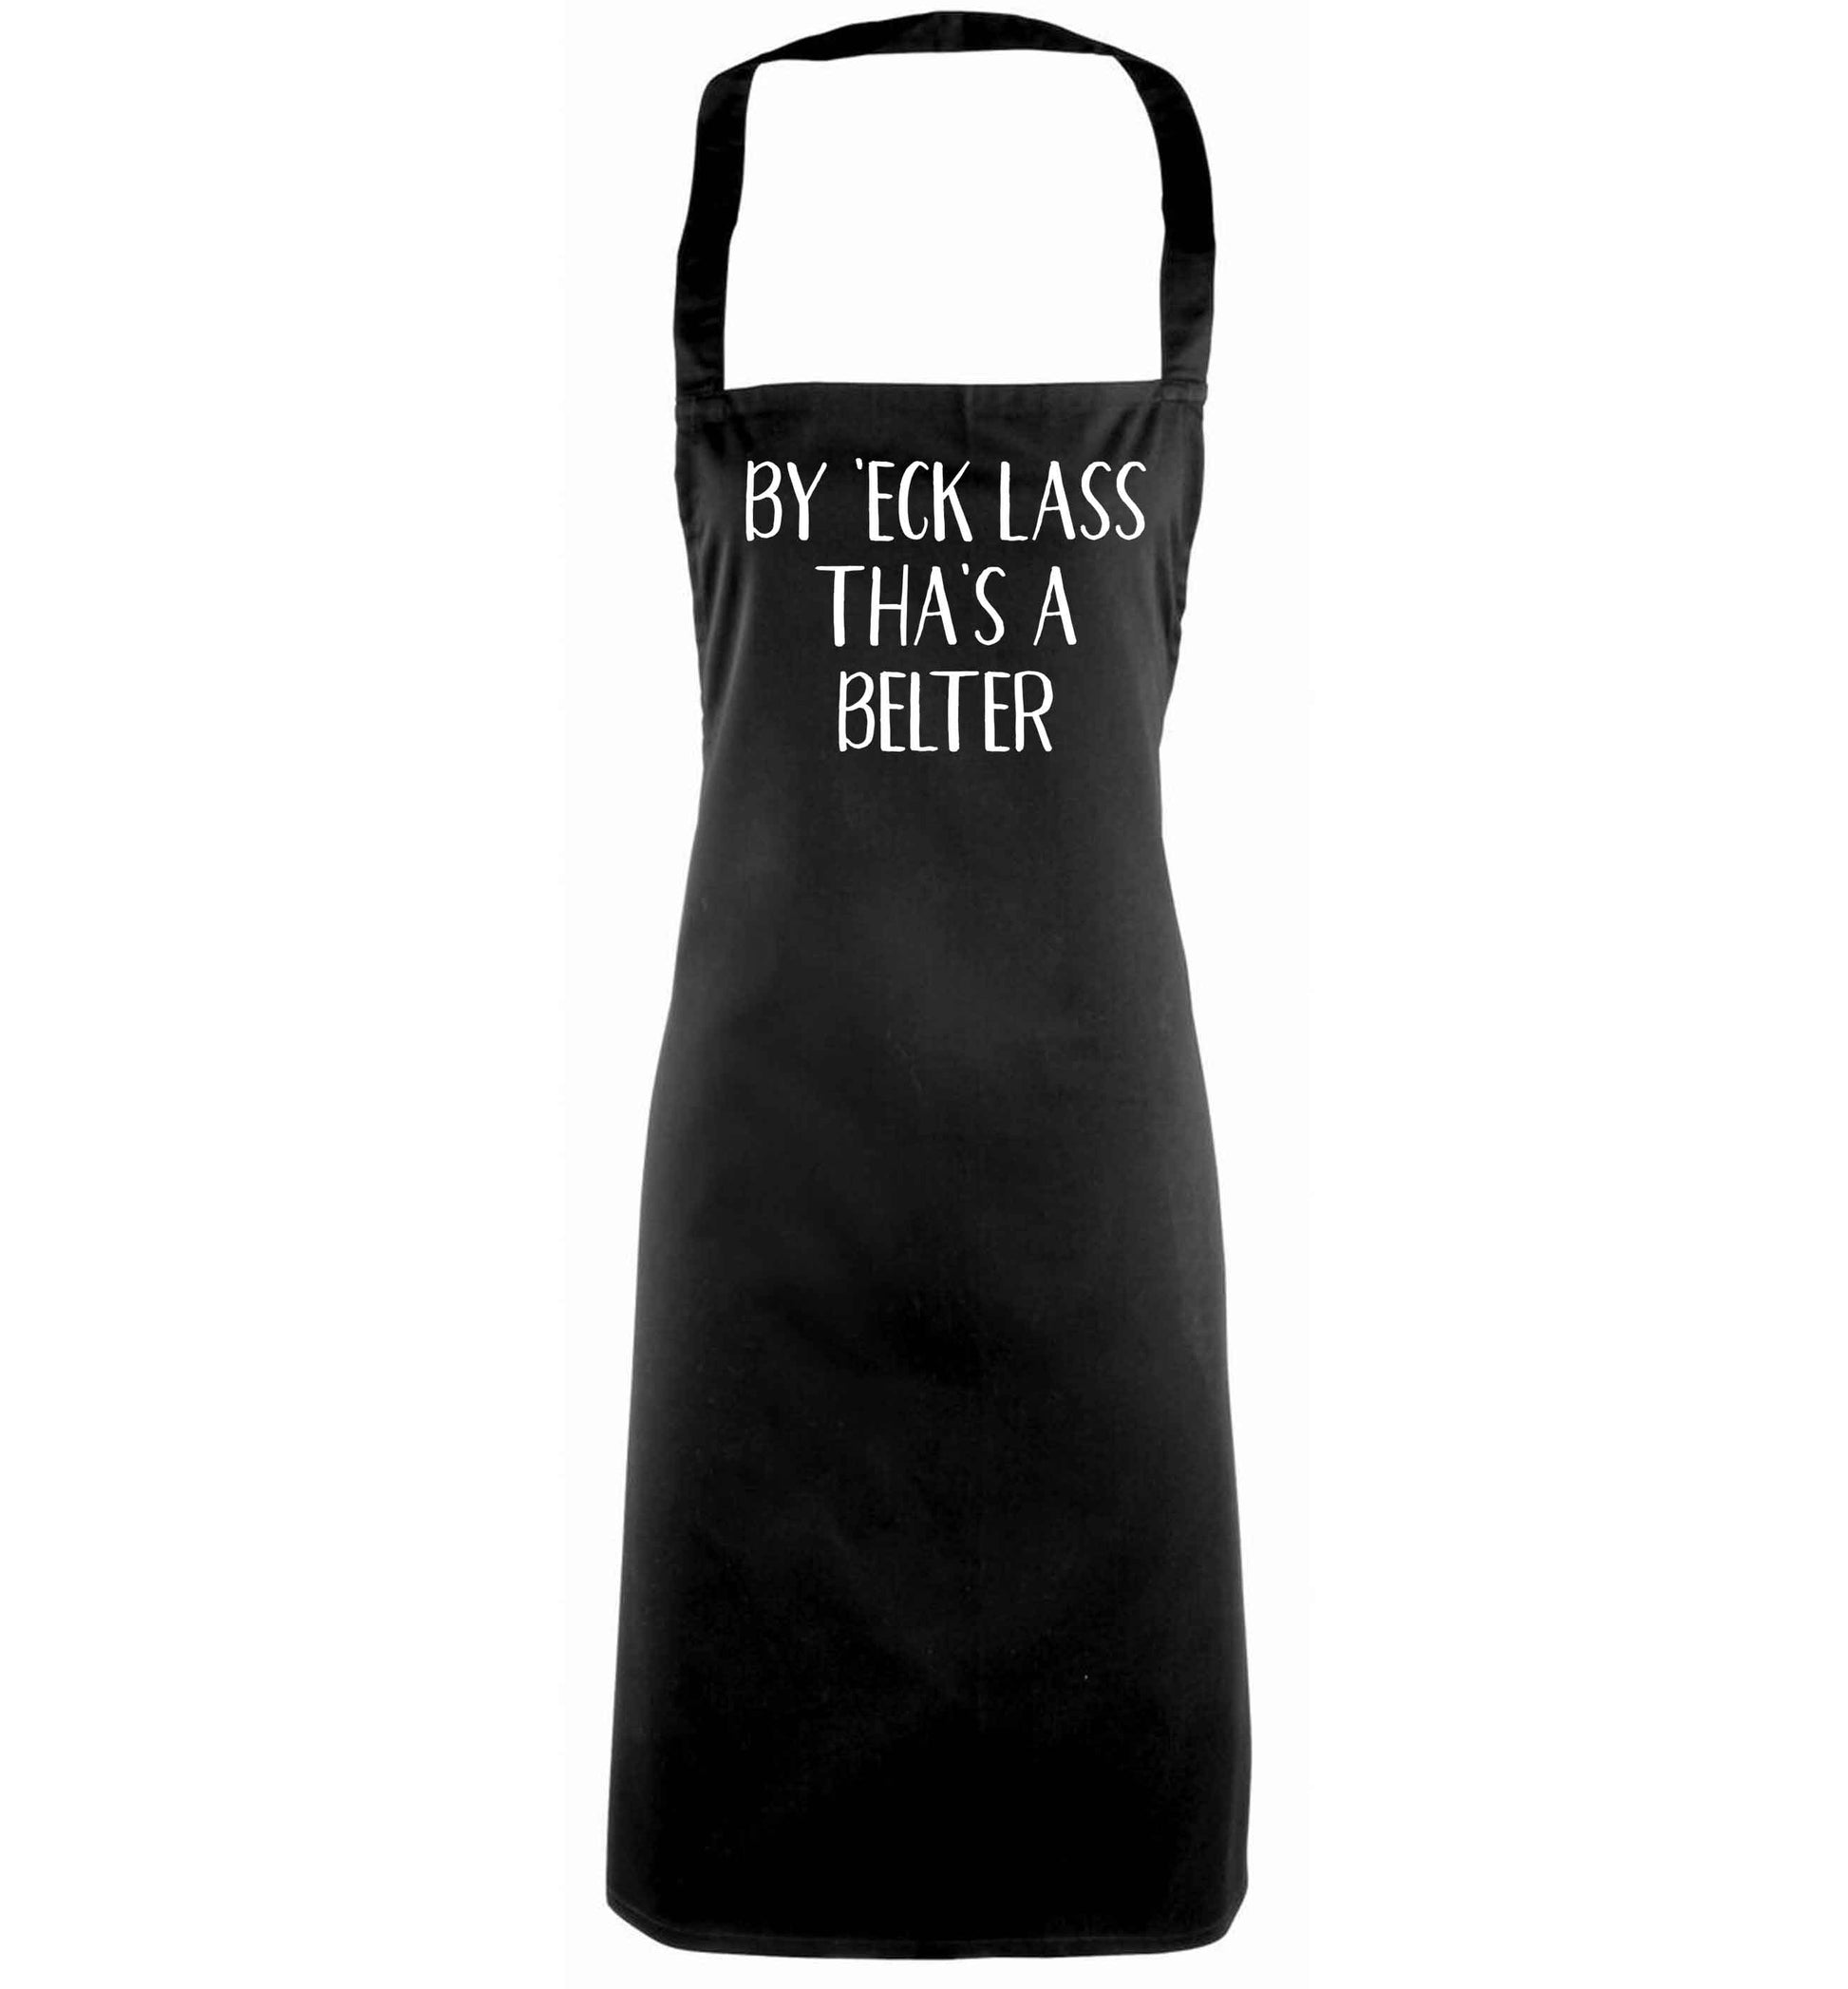 Be 'eck lass tha's a belter black apron